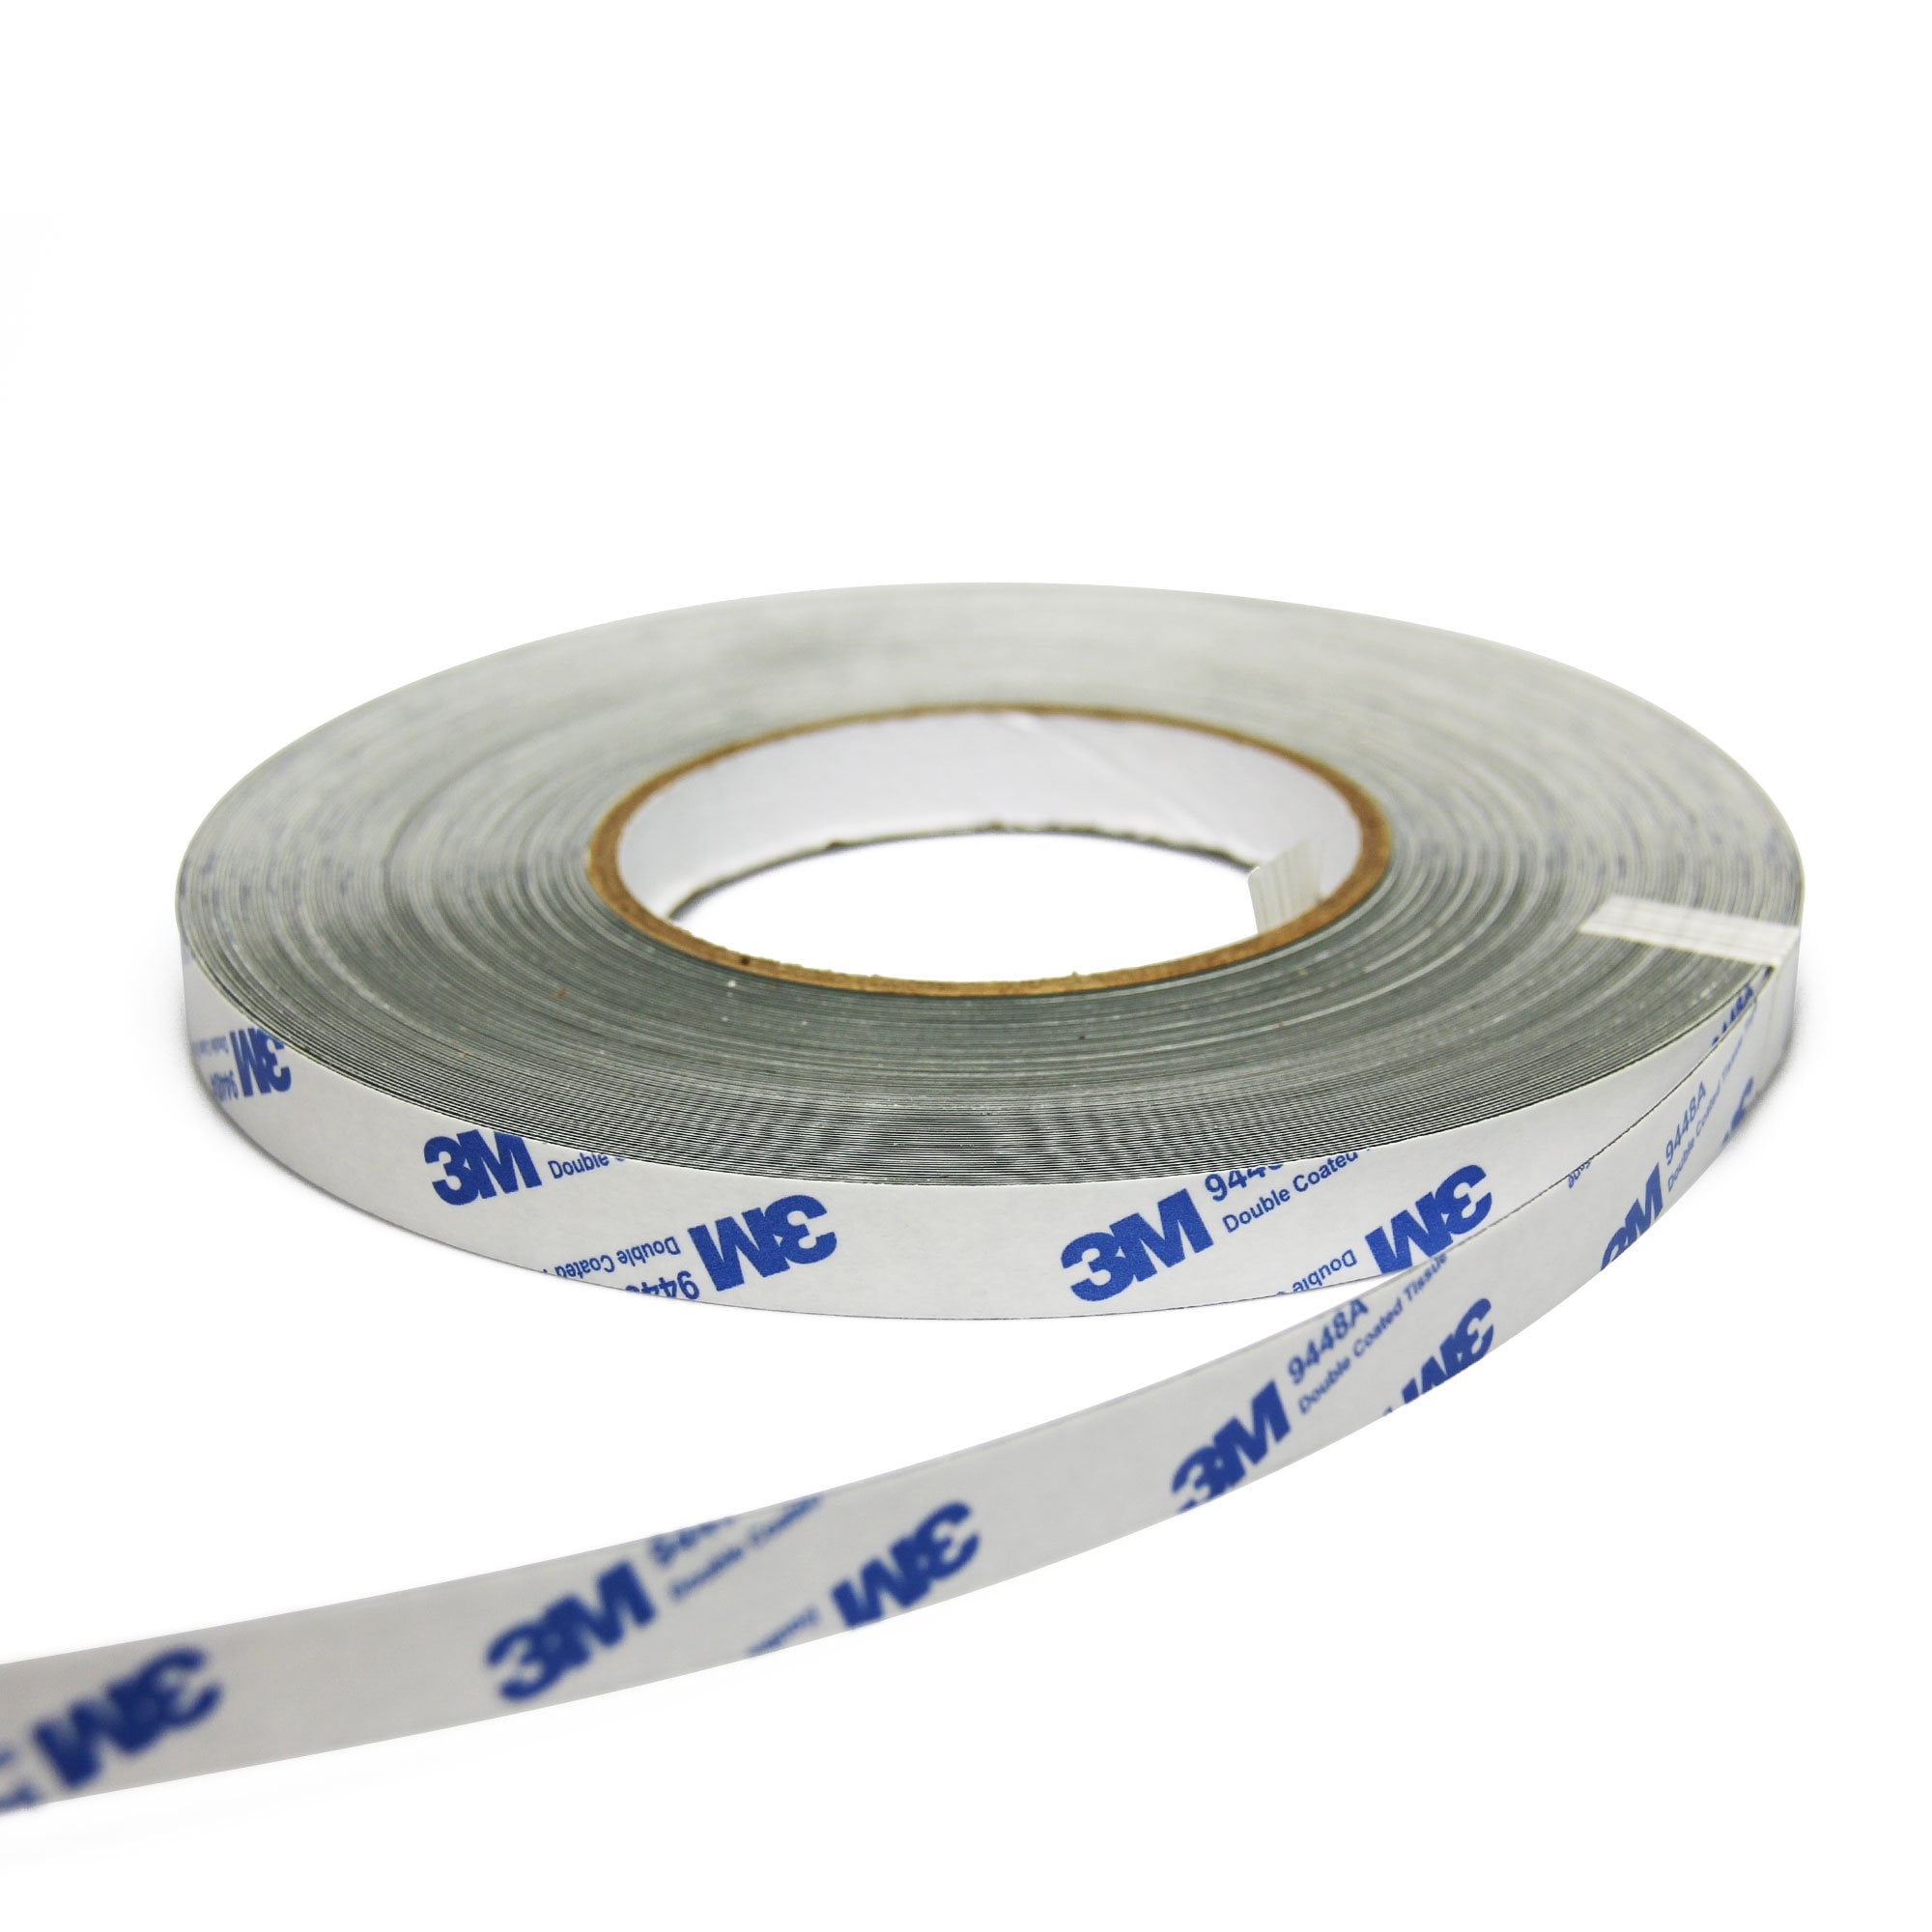 SteelFlex® 37/47 Wide Steel Tape - 3M Self-Adhesive / Gloss White